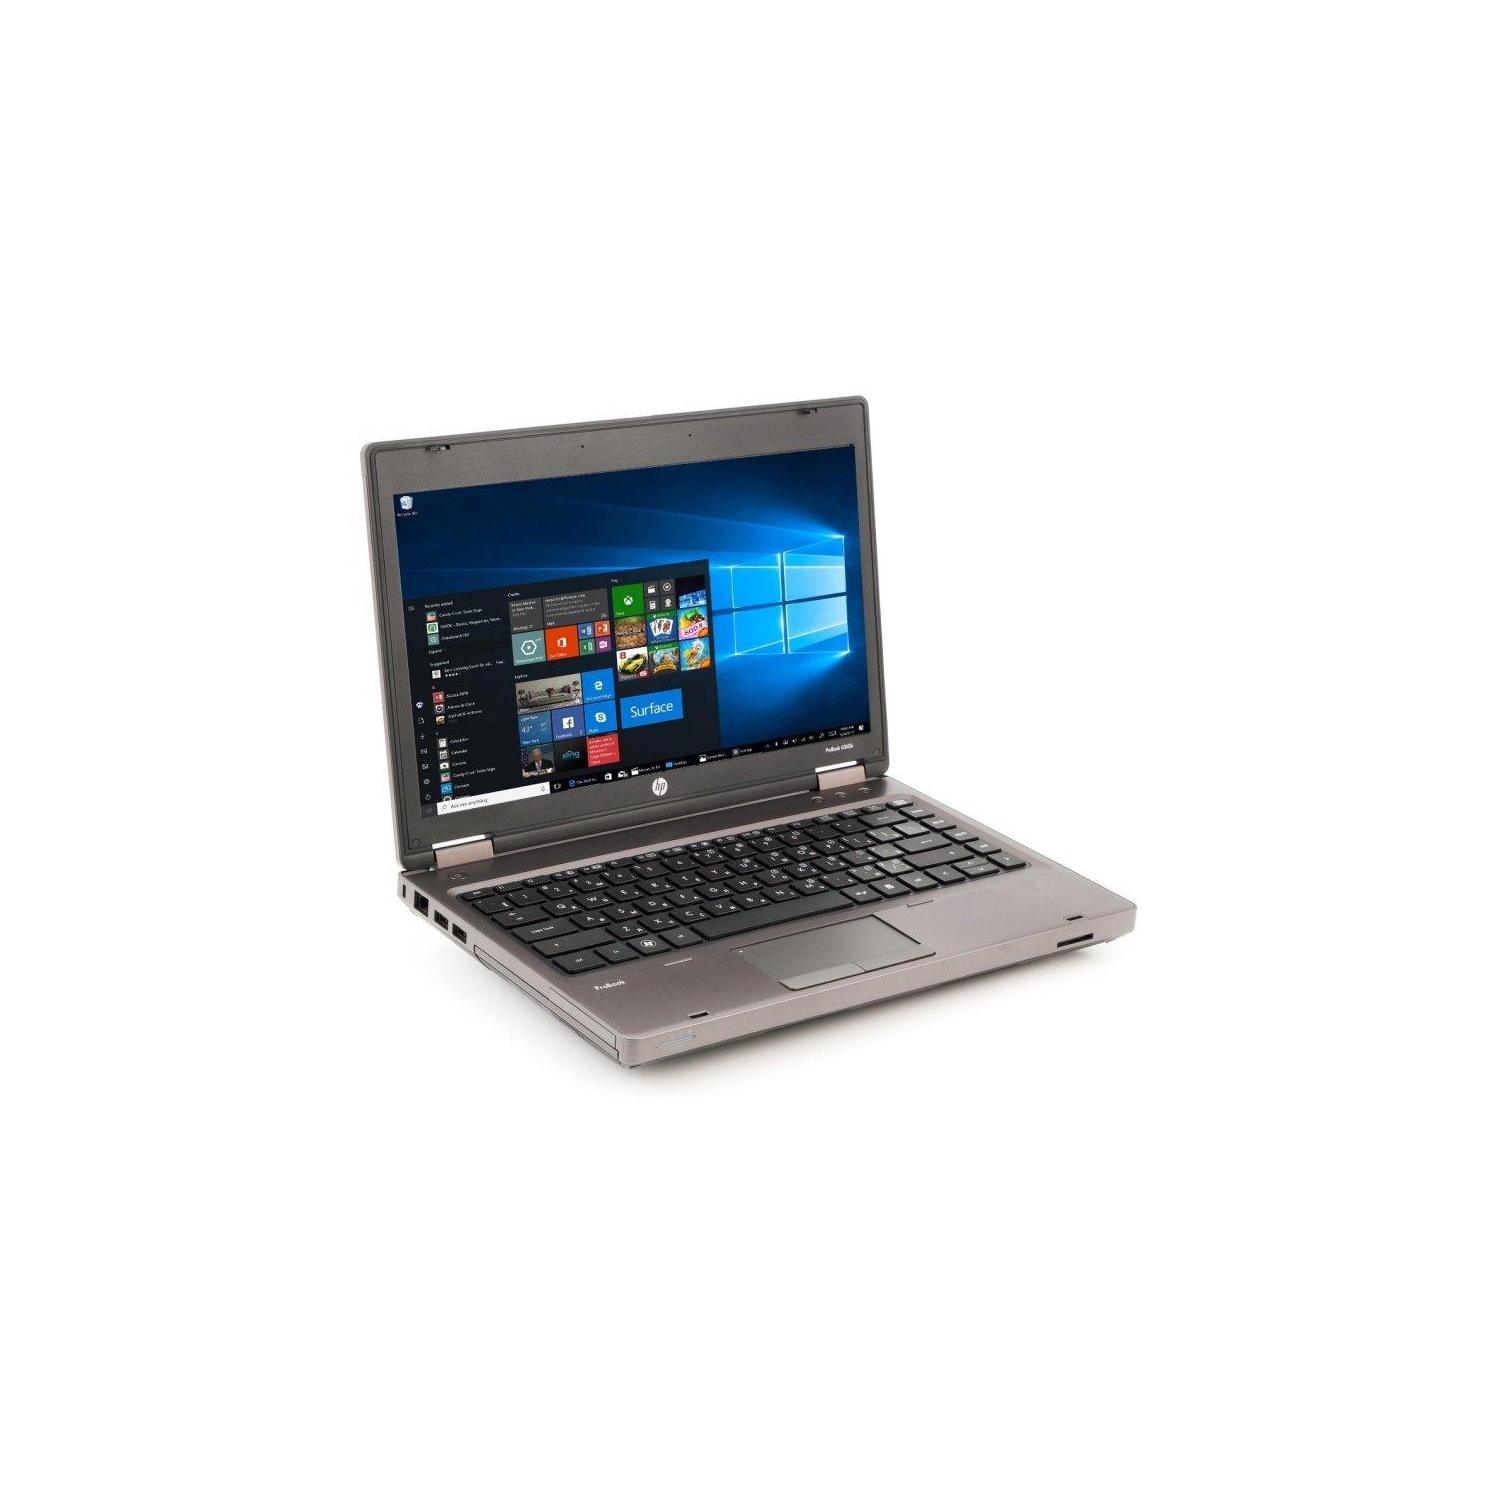 Refurbished (Good) - HP Probook 6360b Laptop: Intel Core i5-2520M 2.5 GHz, 4GB RAM, 250GB HDD, 13.3 Inch Screen, Webcam, DVDRW, French Keyboard, Windows 10 Pro